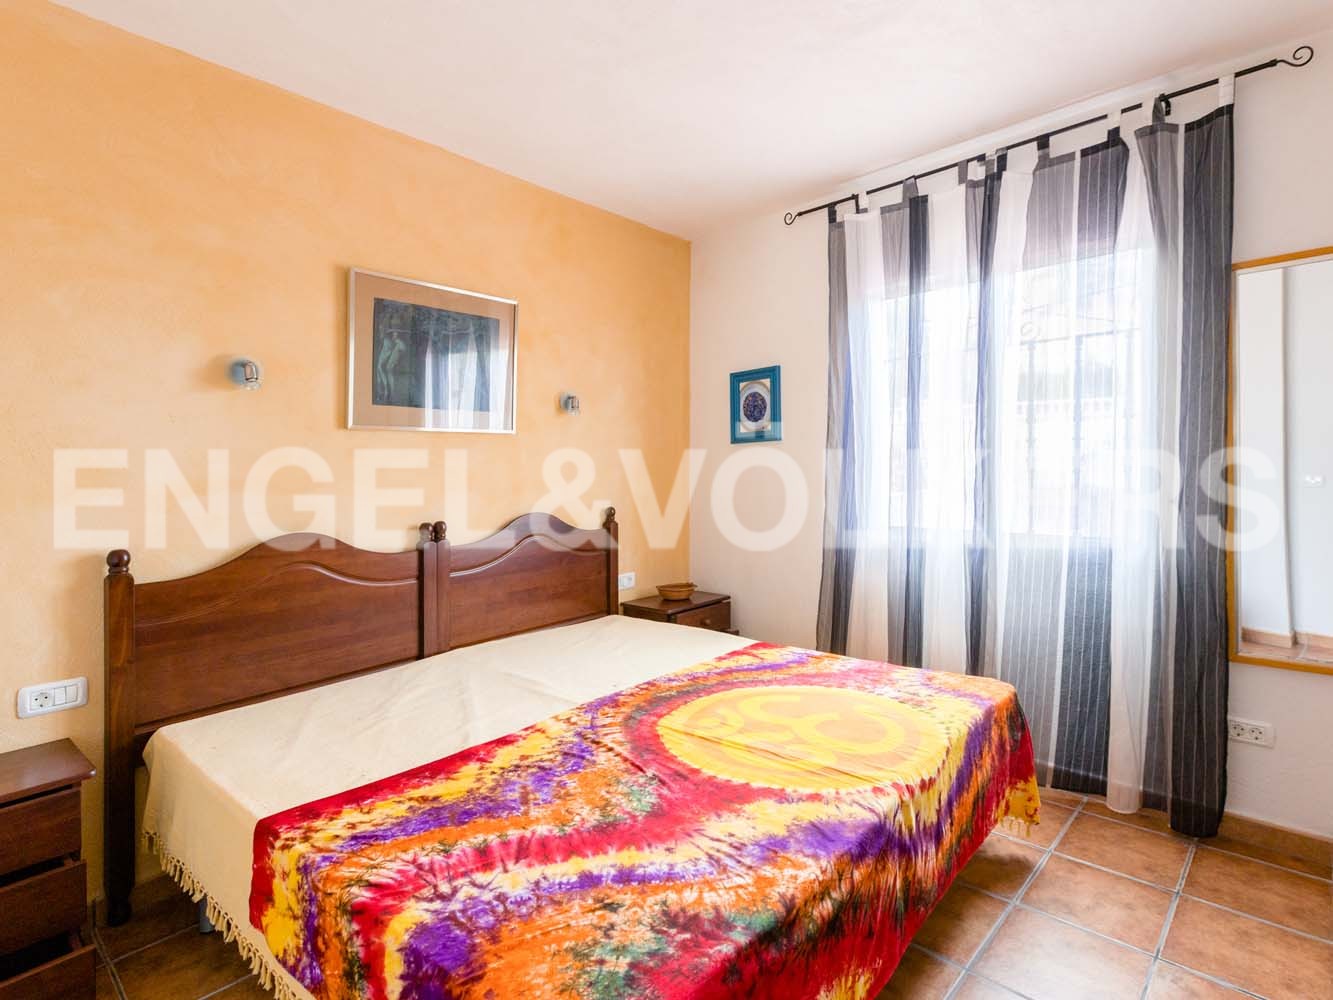 House in La Orotava - Bedroom 2 (apartment 2)